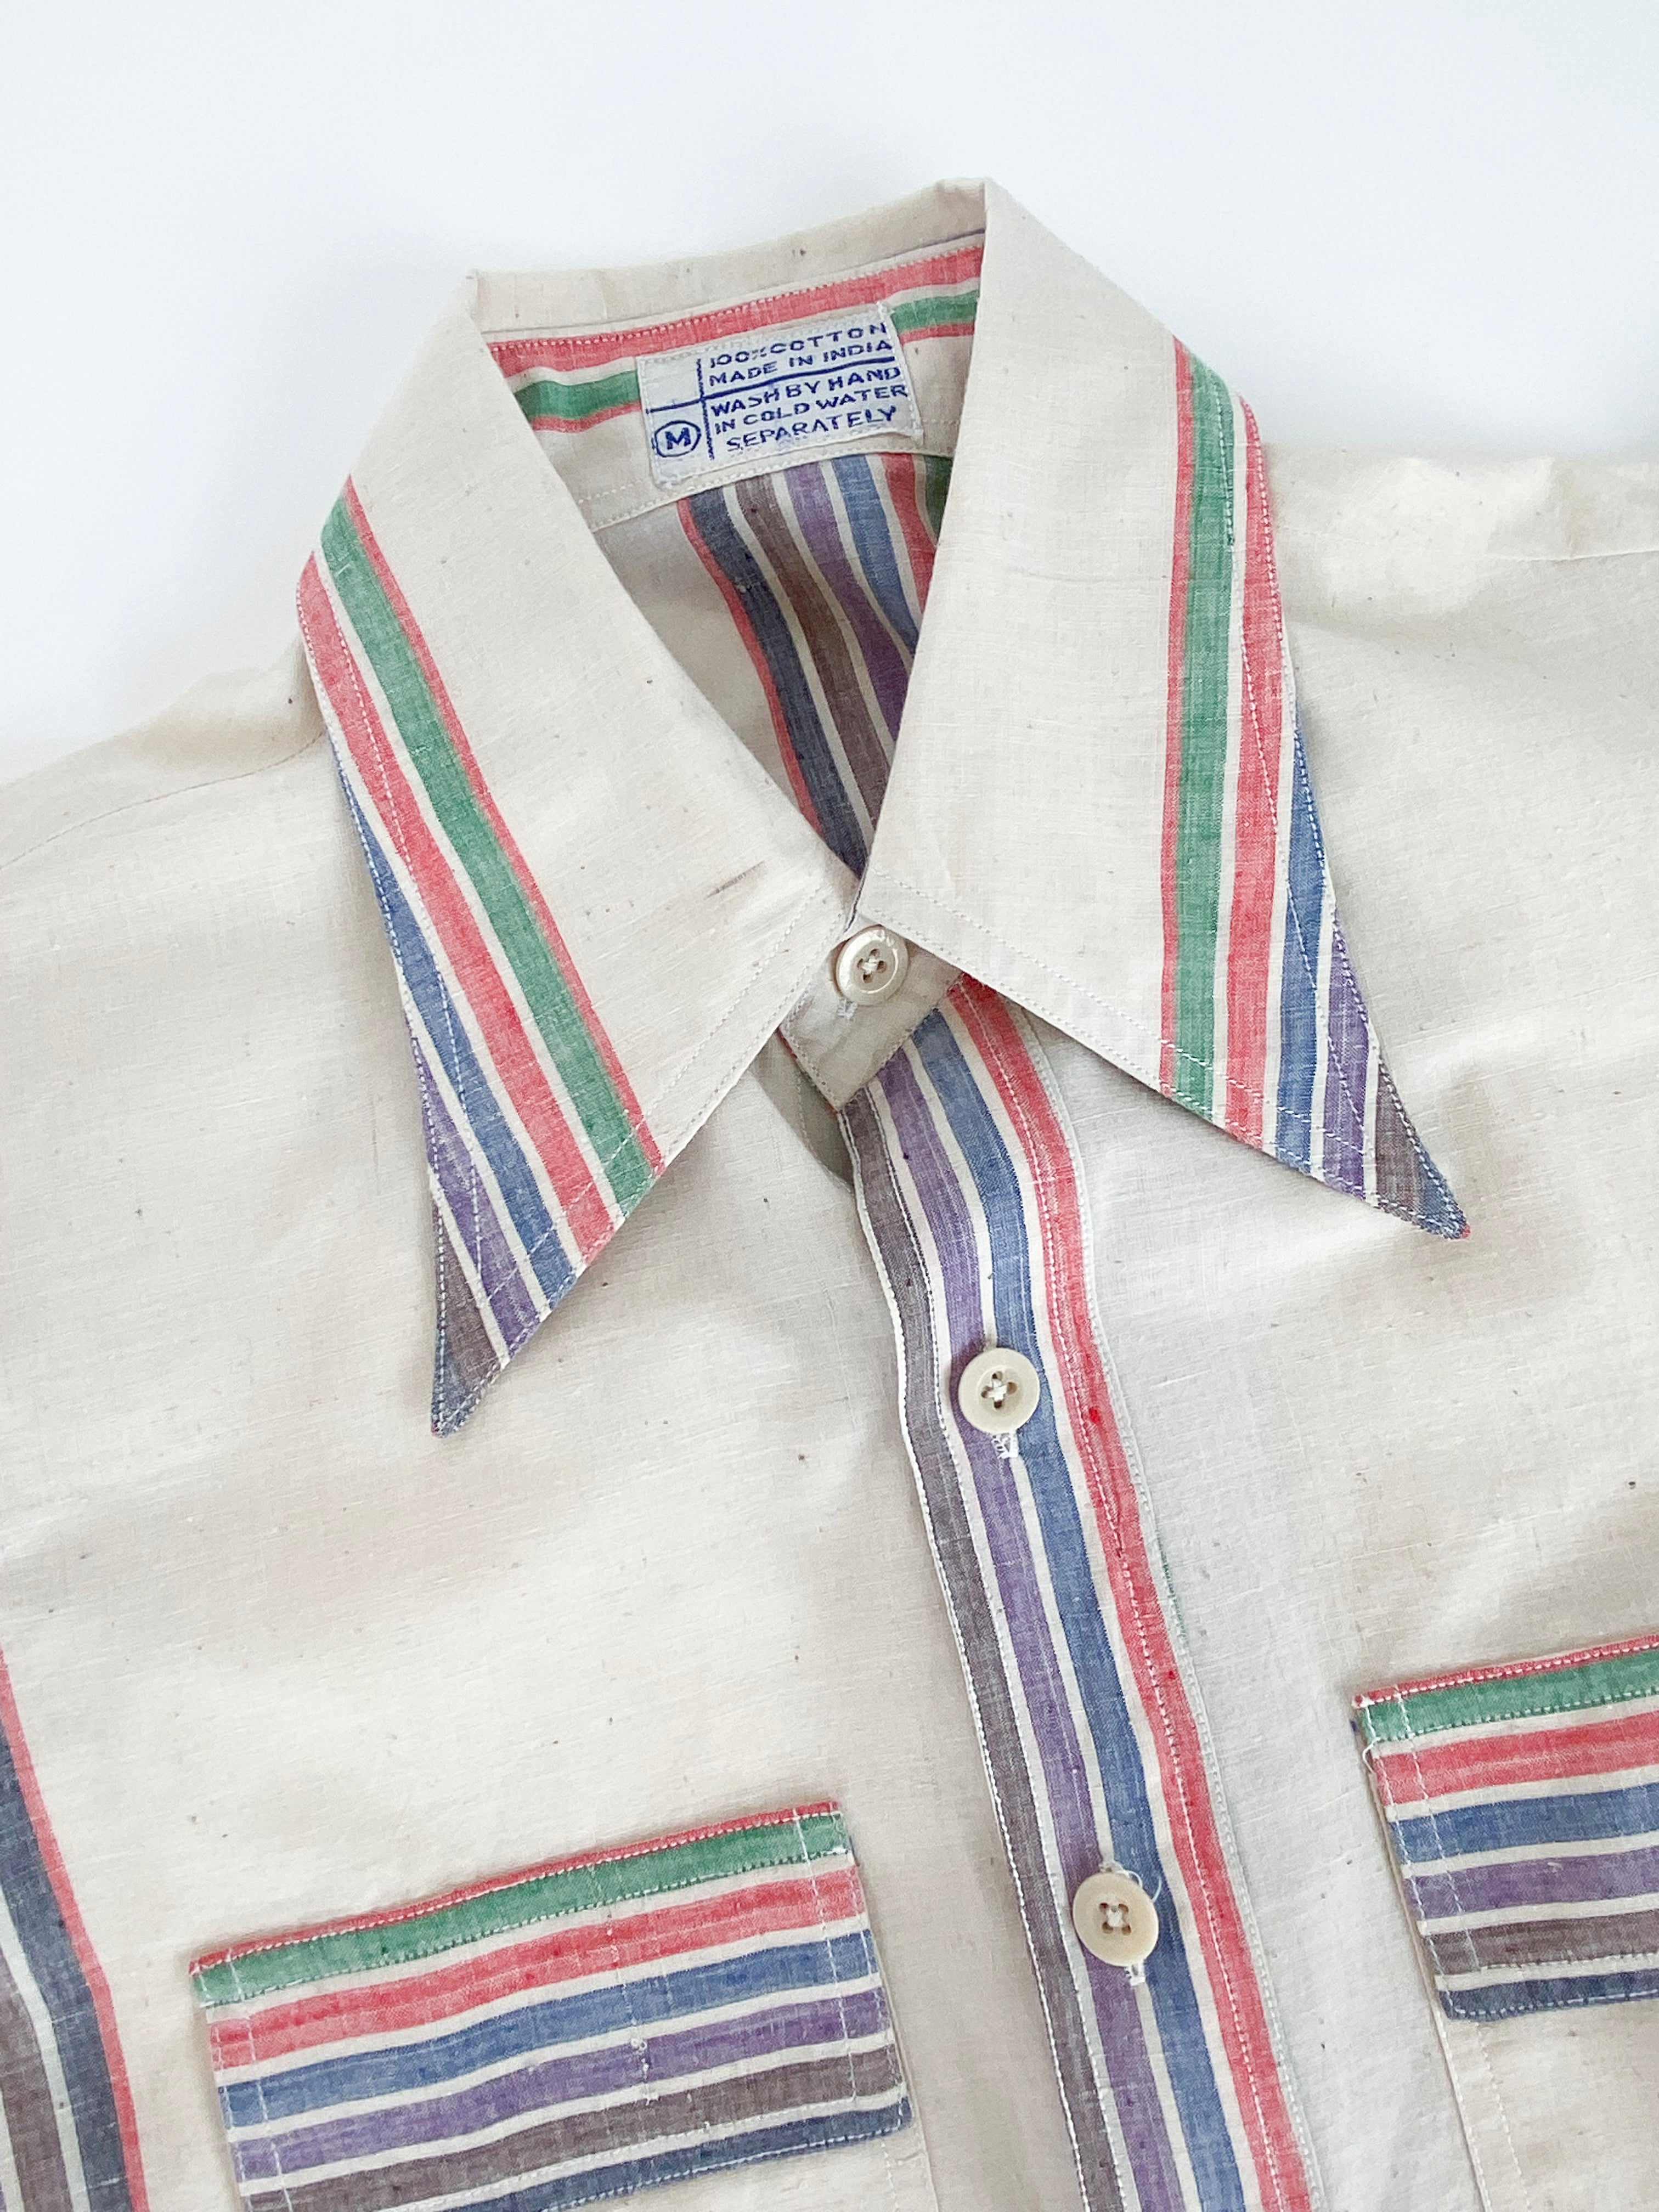 70's Indian cotton shirt